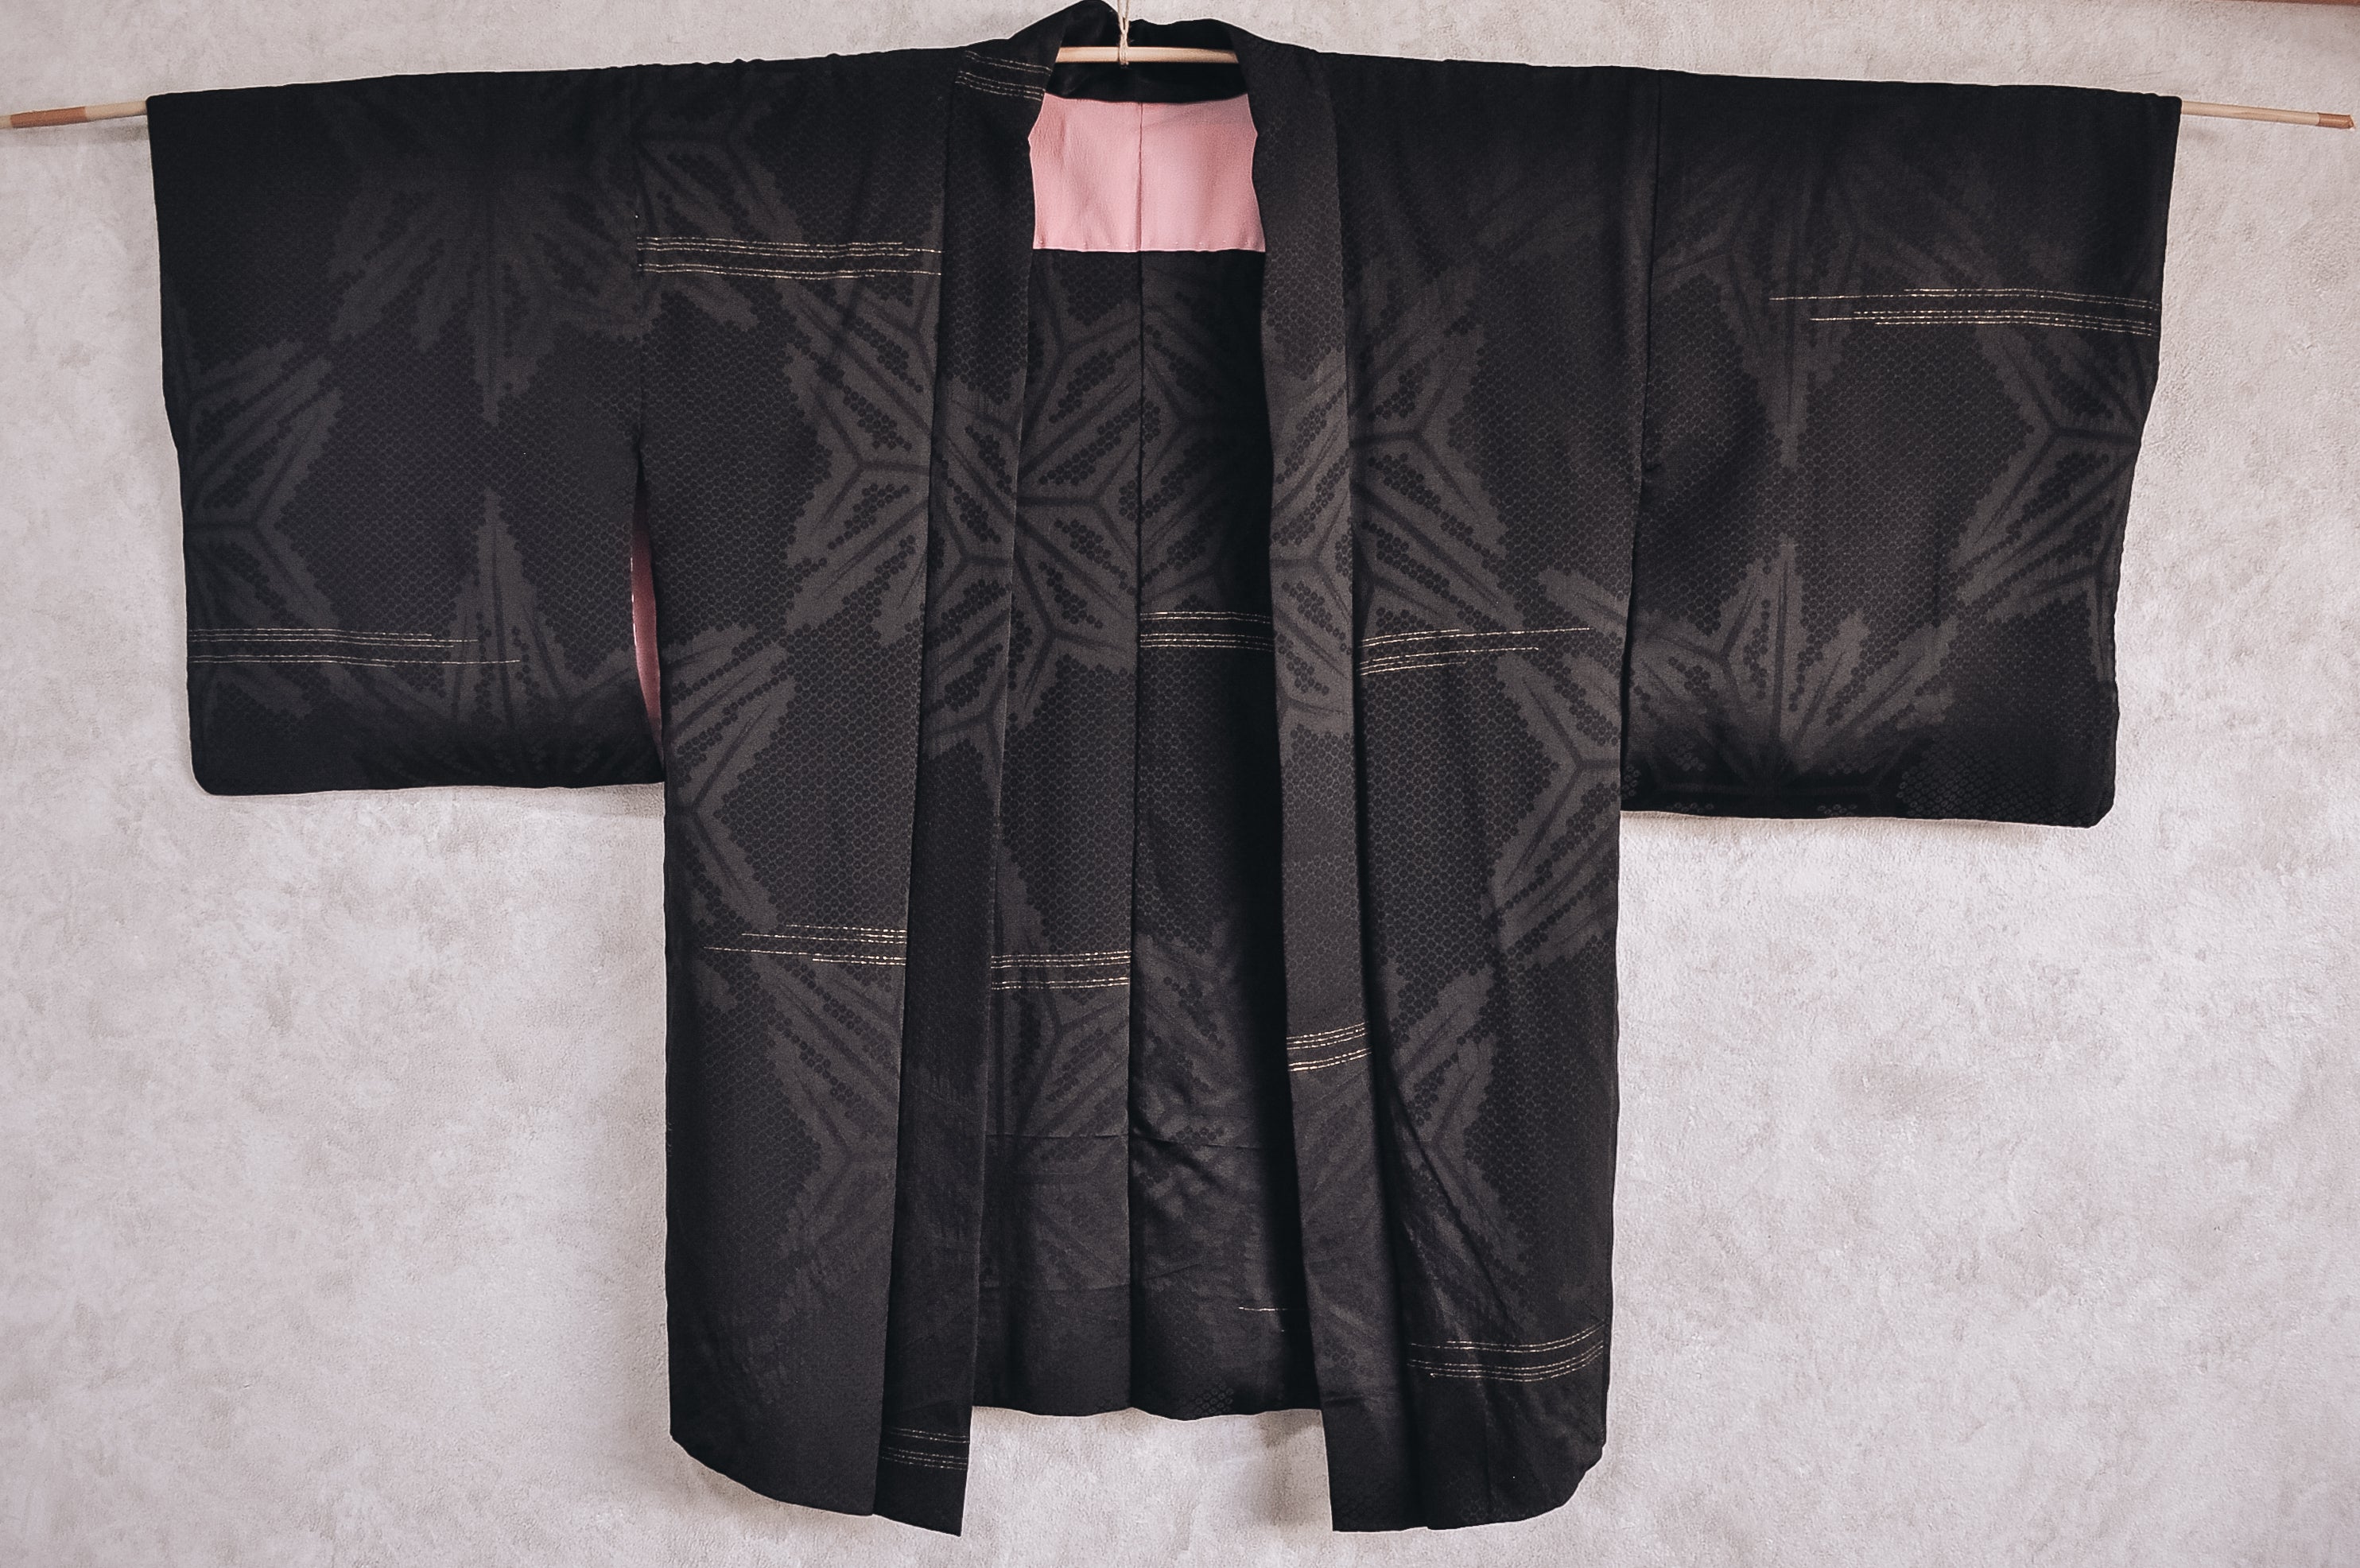 Panther Starburst 60S Vintage Silk Kimono Haori Jacket